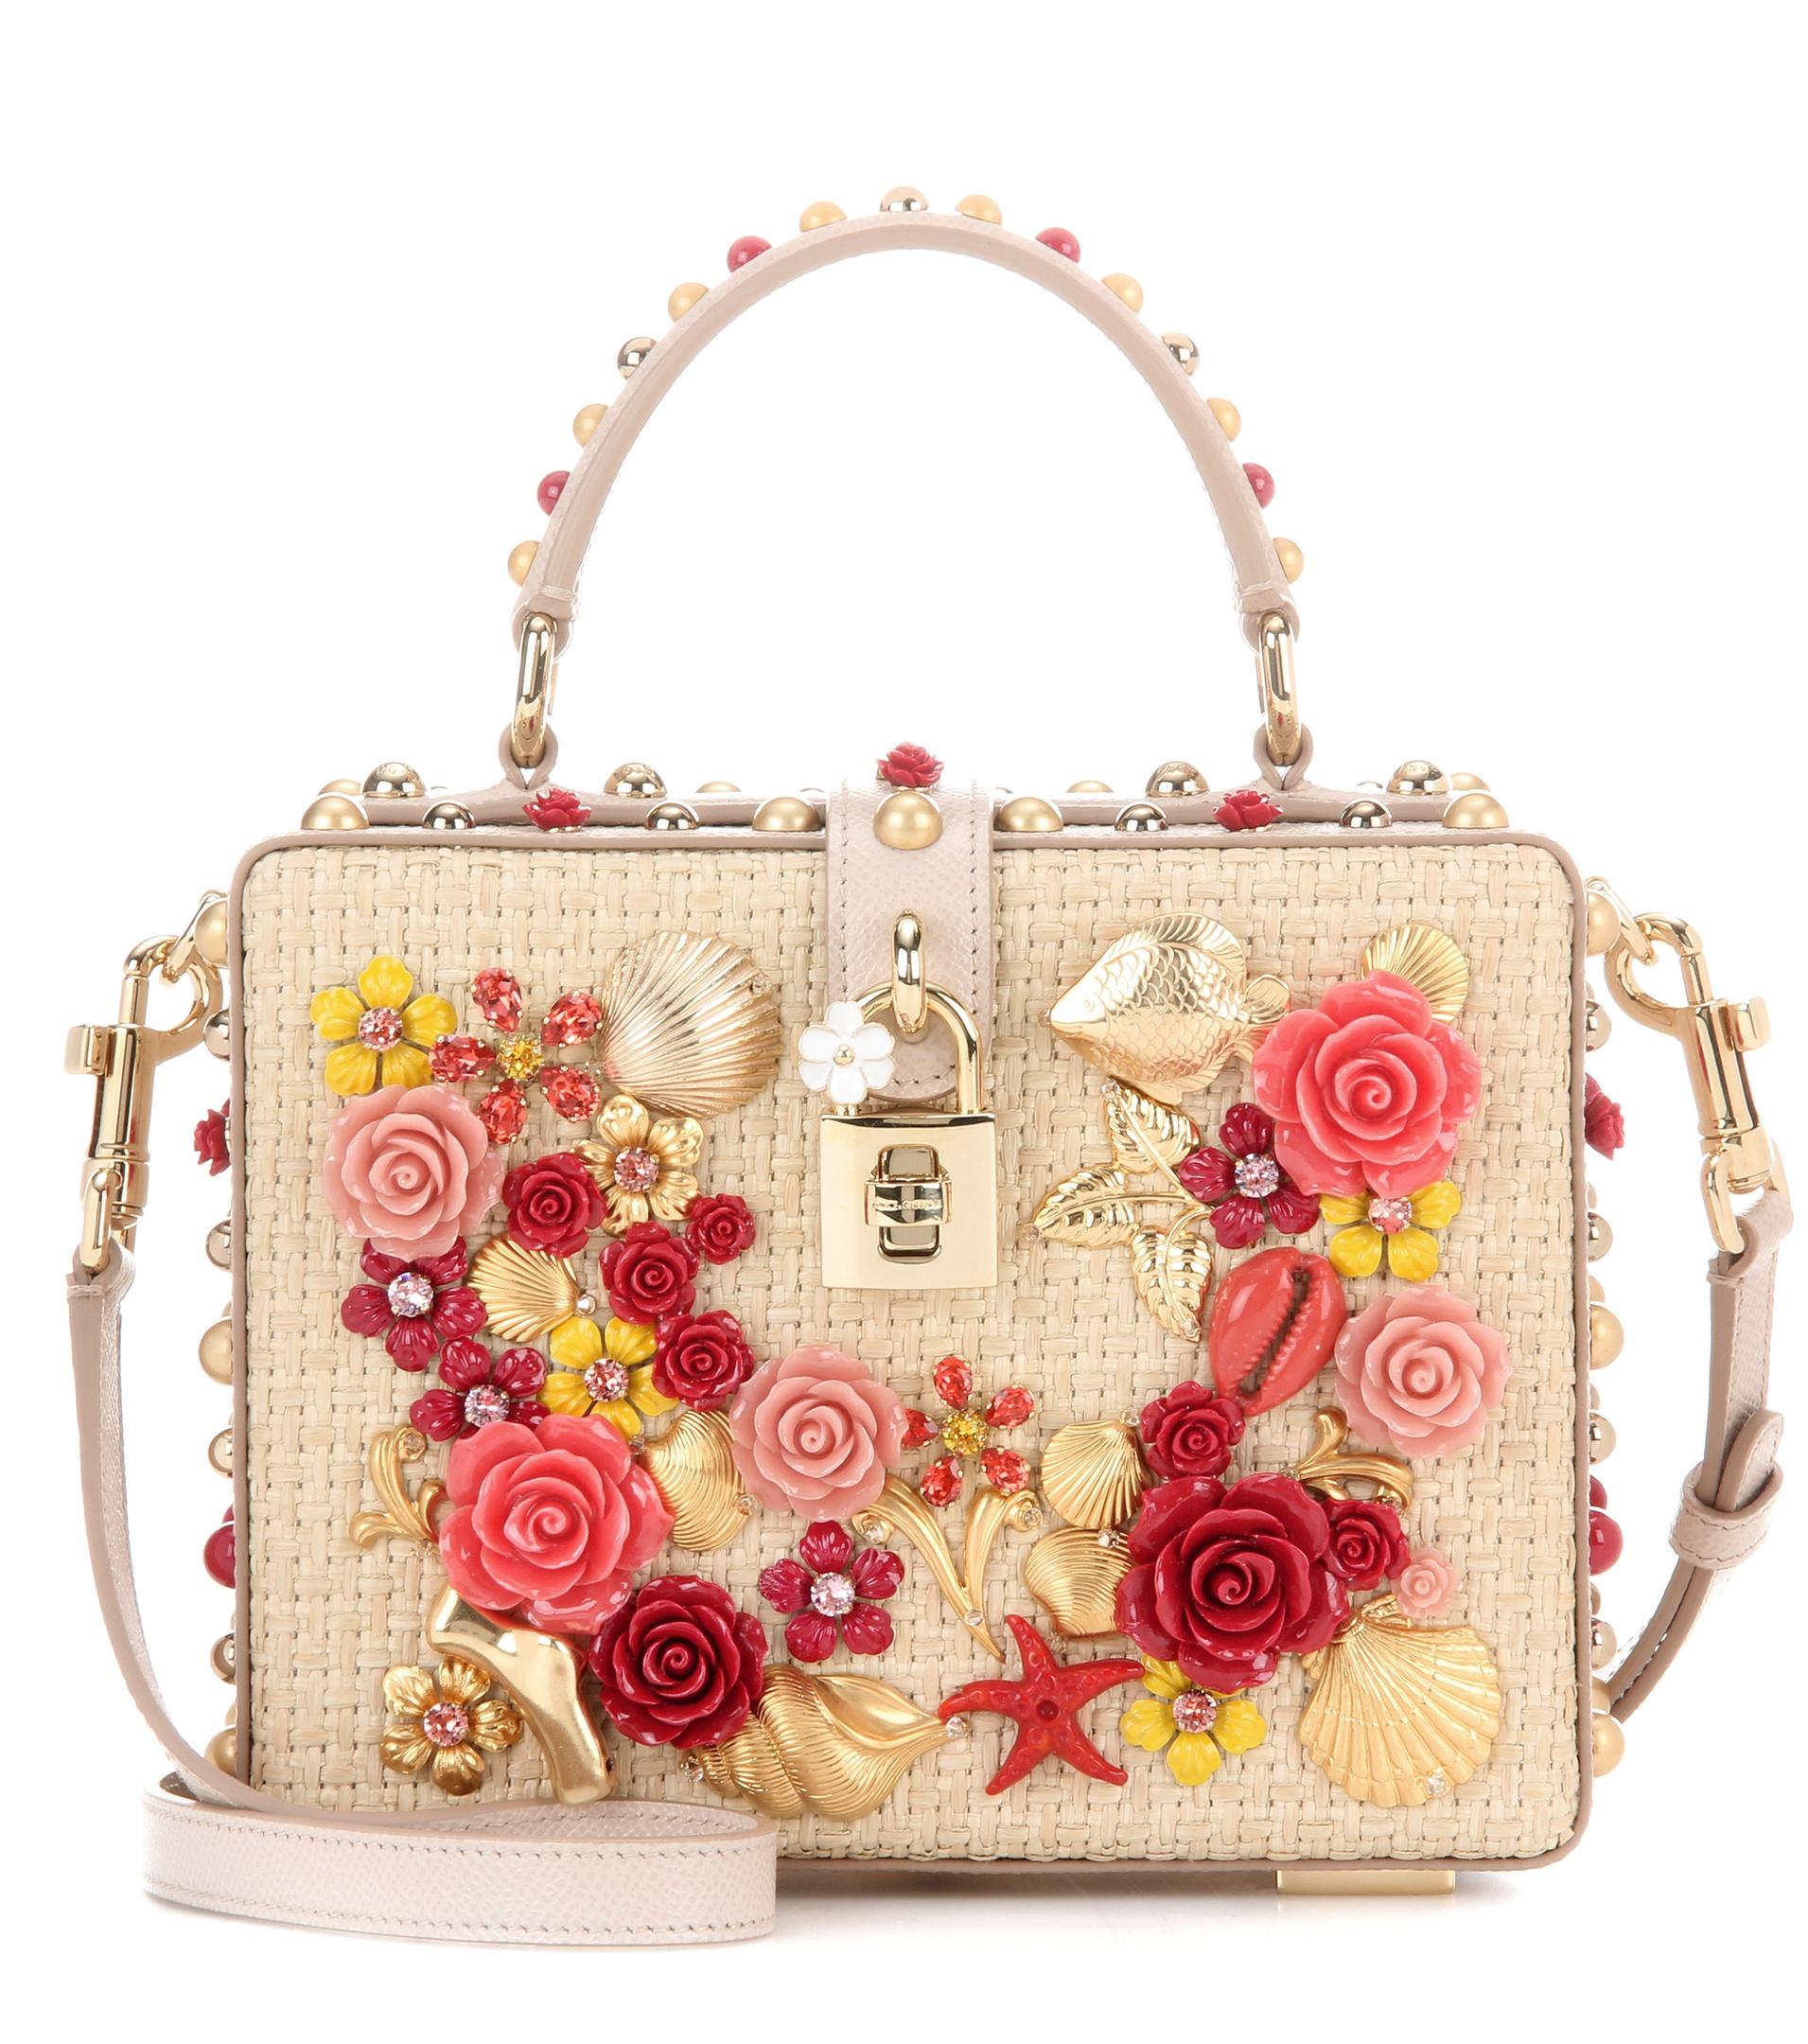 Lyst - Dolce & Gabbana Dolce Box Embellished Raffia And Leather Handbag ...